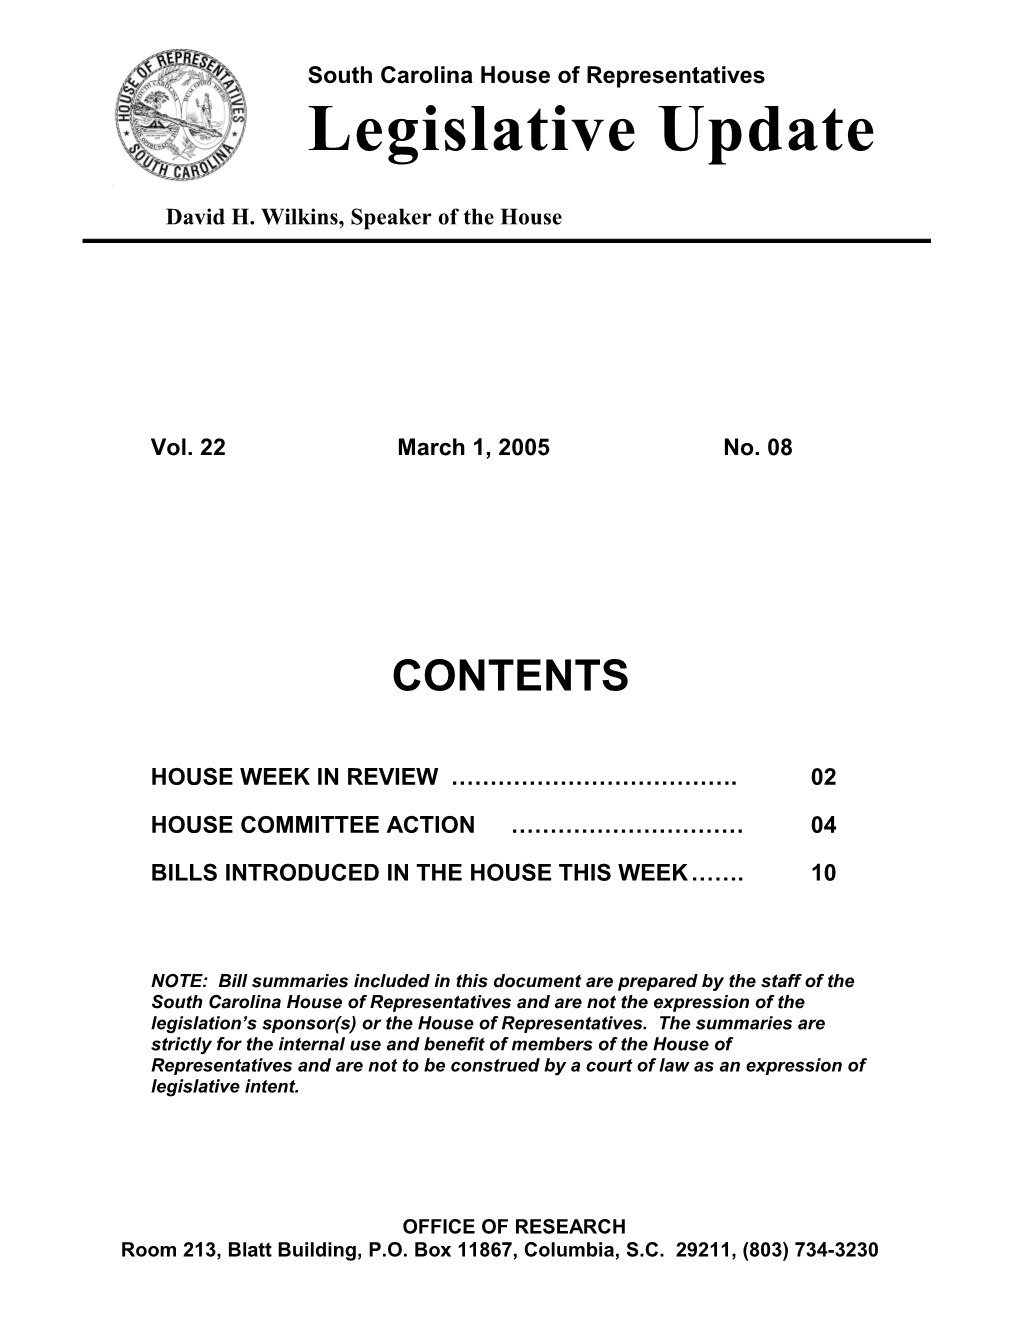 Legislative Update - Vol. 22 No. 08 March 1, 2005 - South Carolina Legislature Online